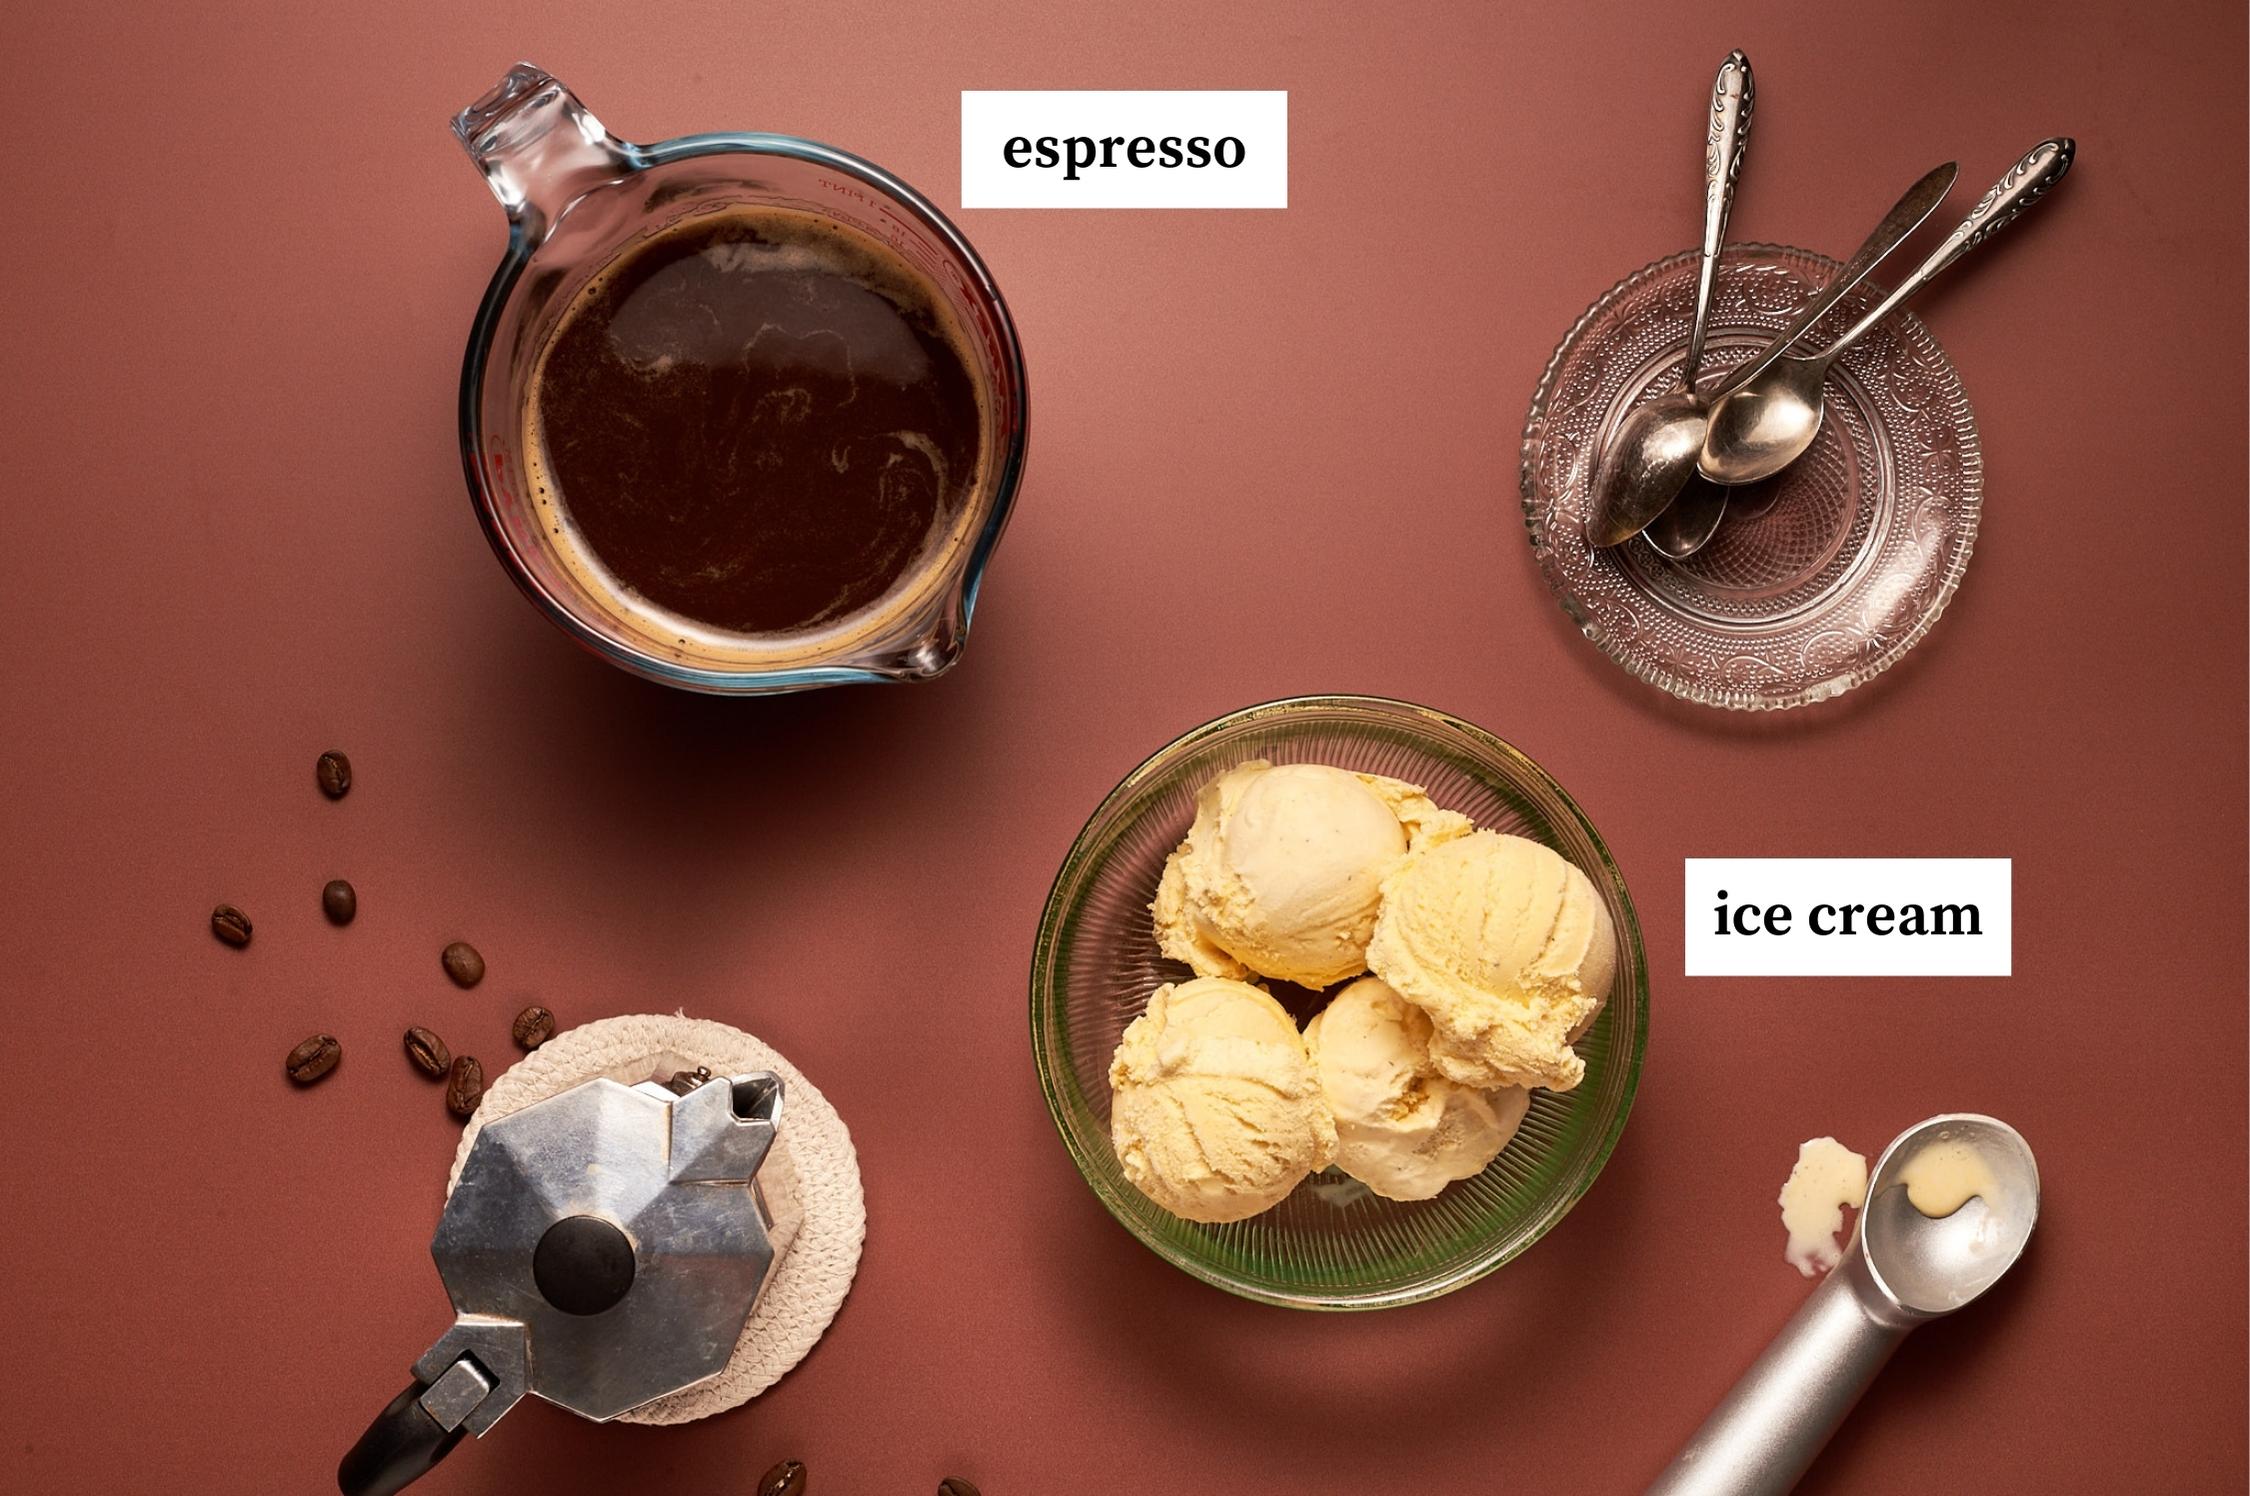 ingredients for affogato al caffe on a table, espresso coffee and vanilla ice cream